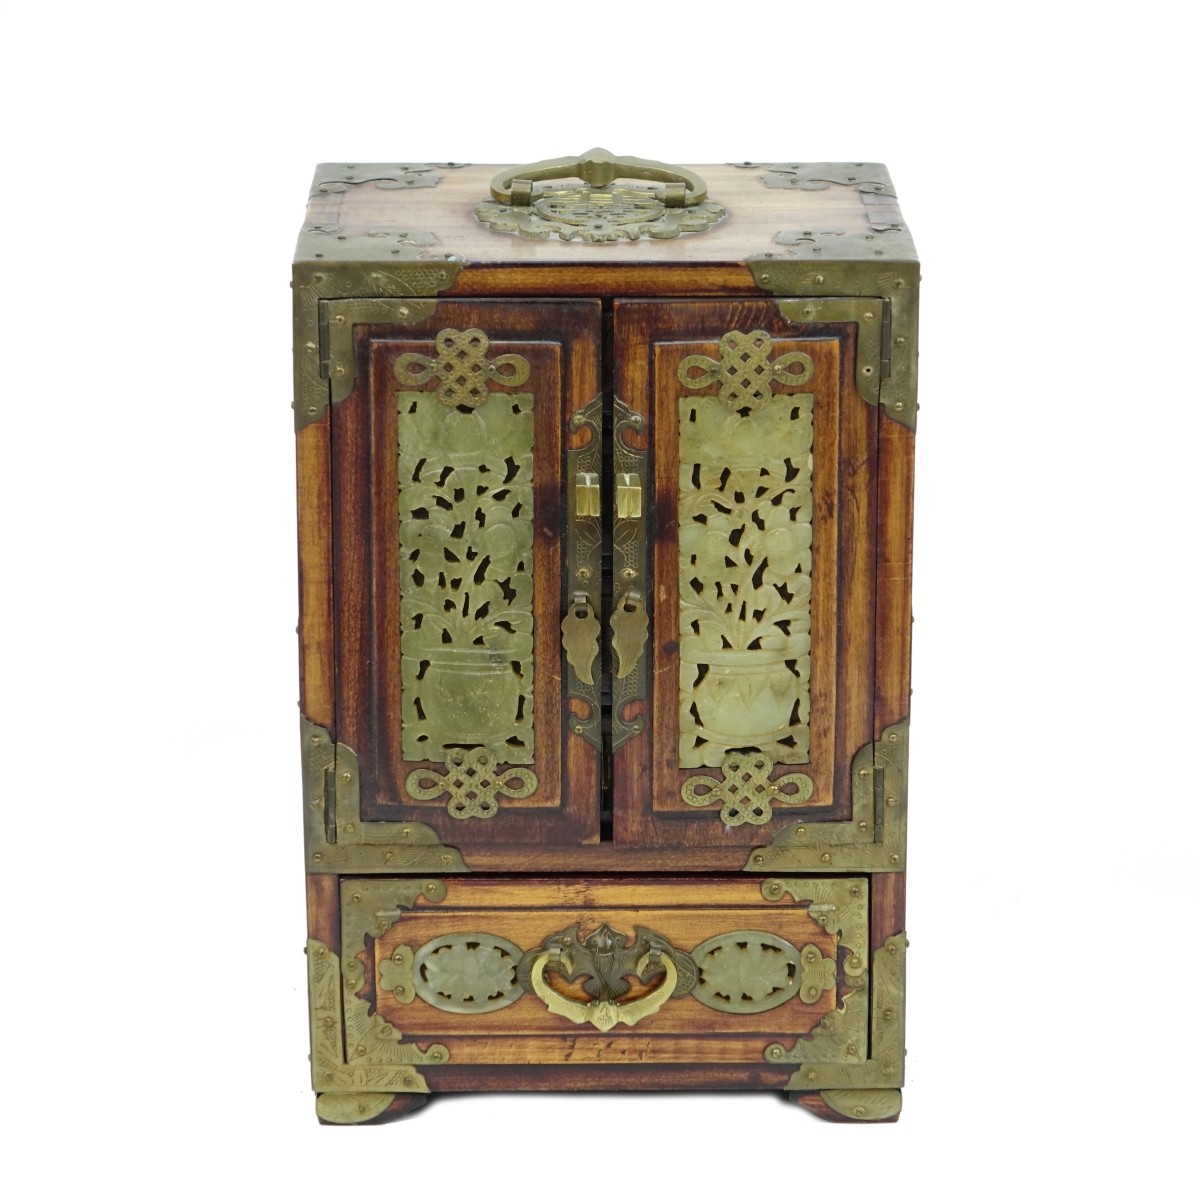 Chinese Jewelry Box with Jade Inserts